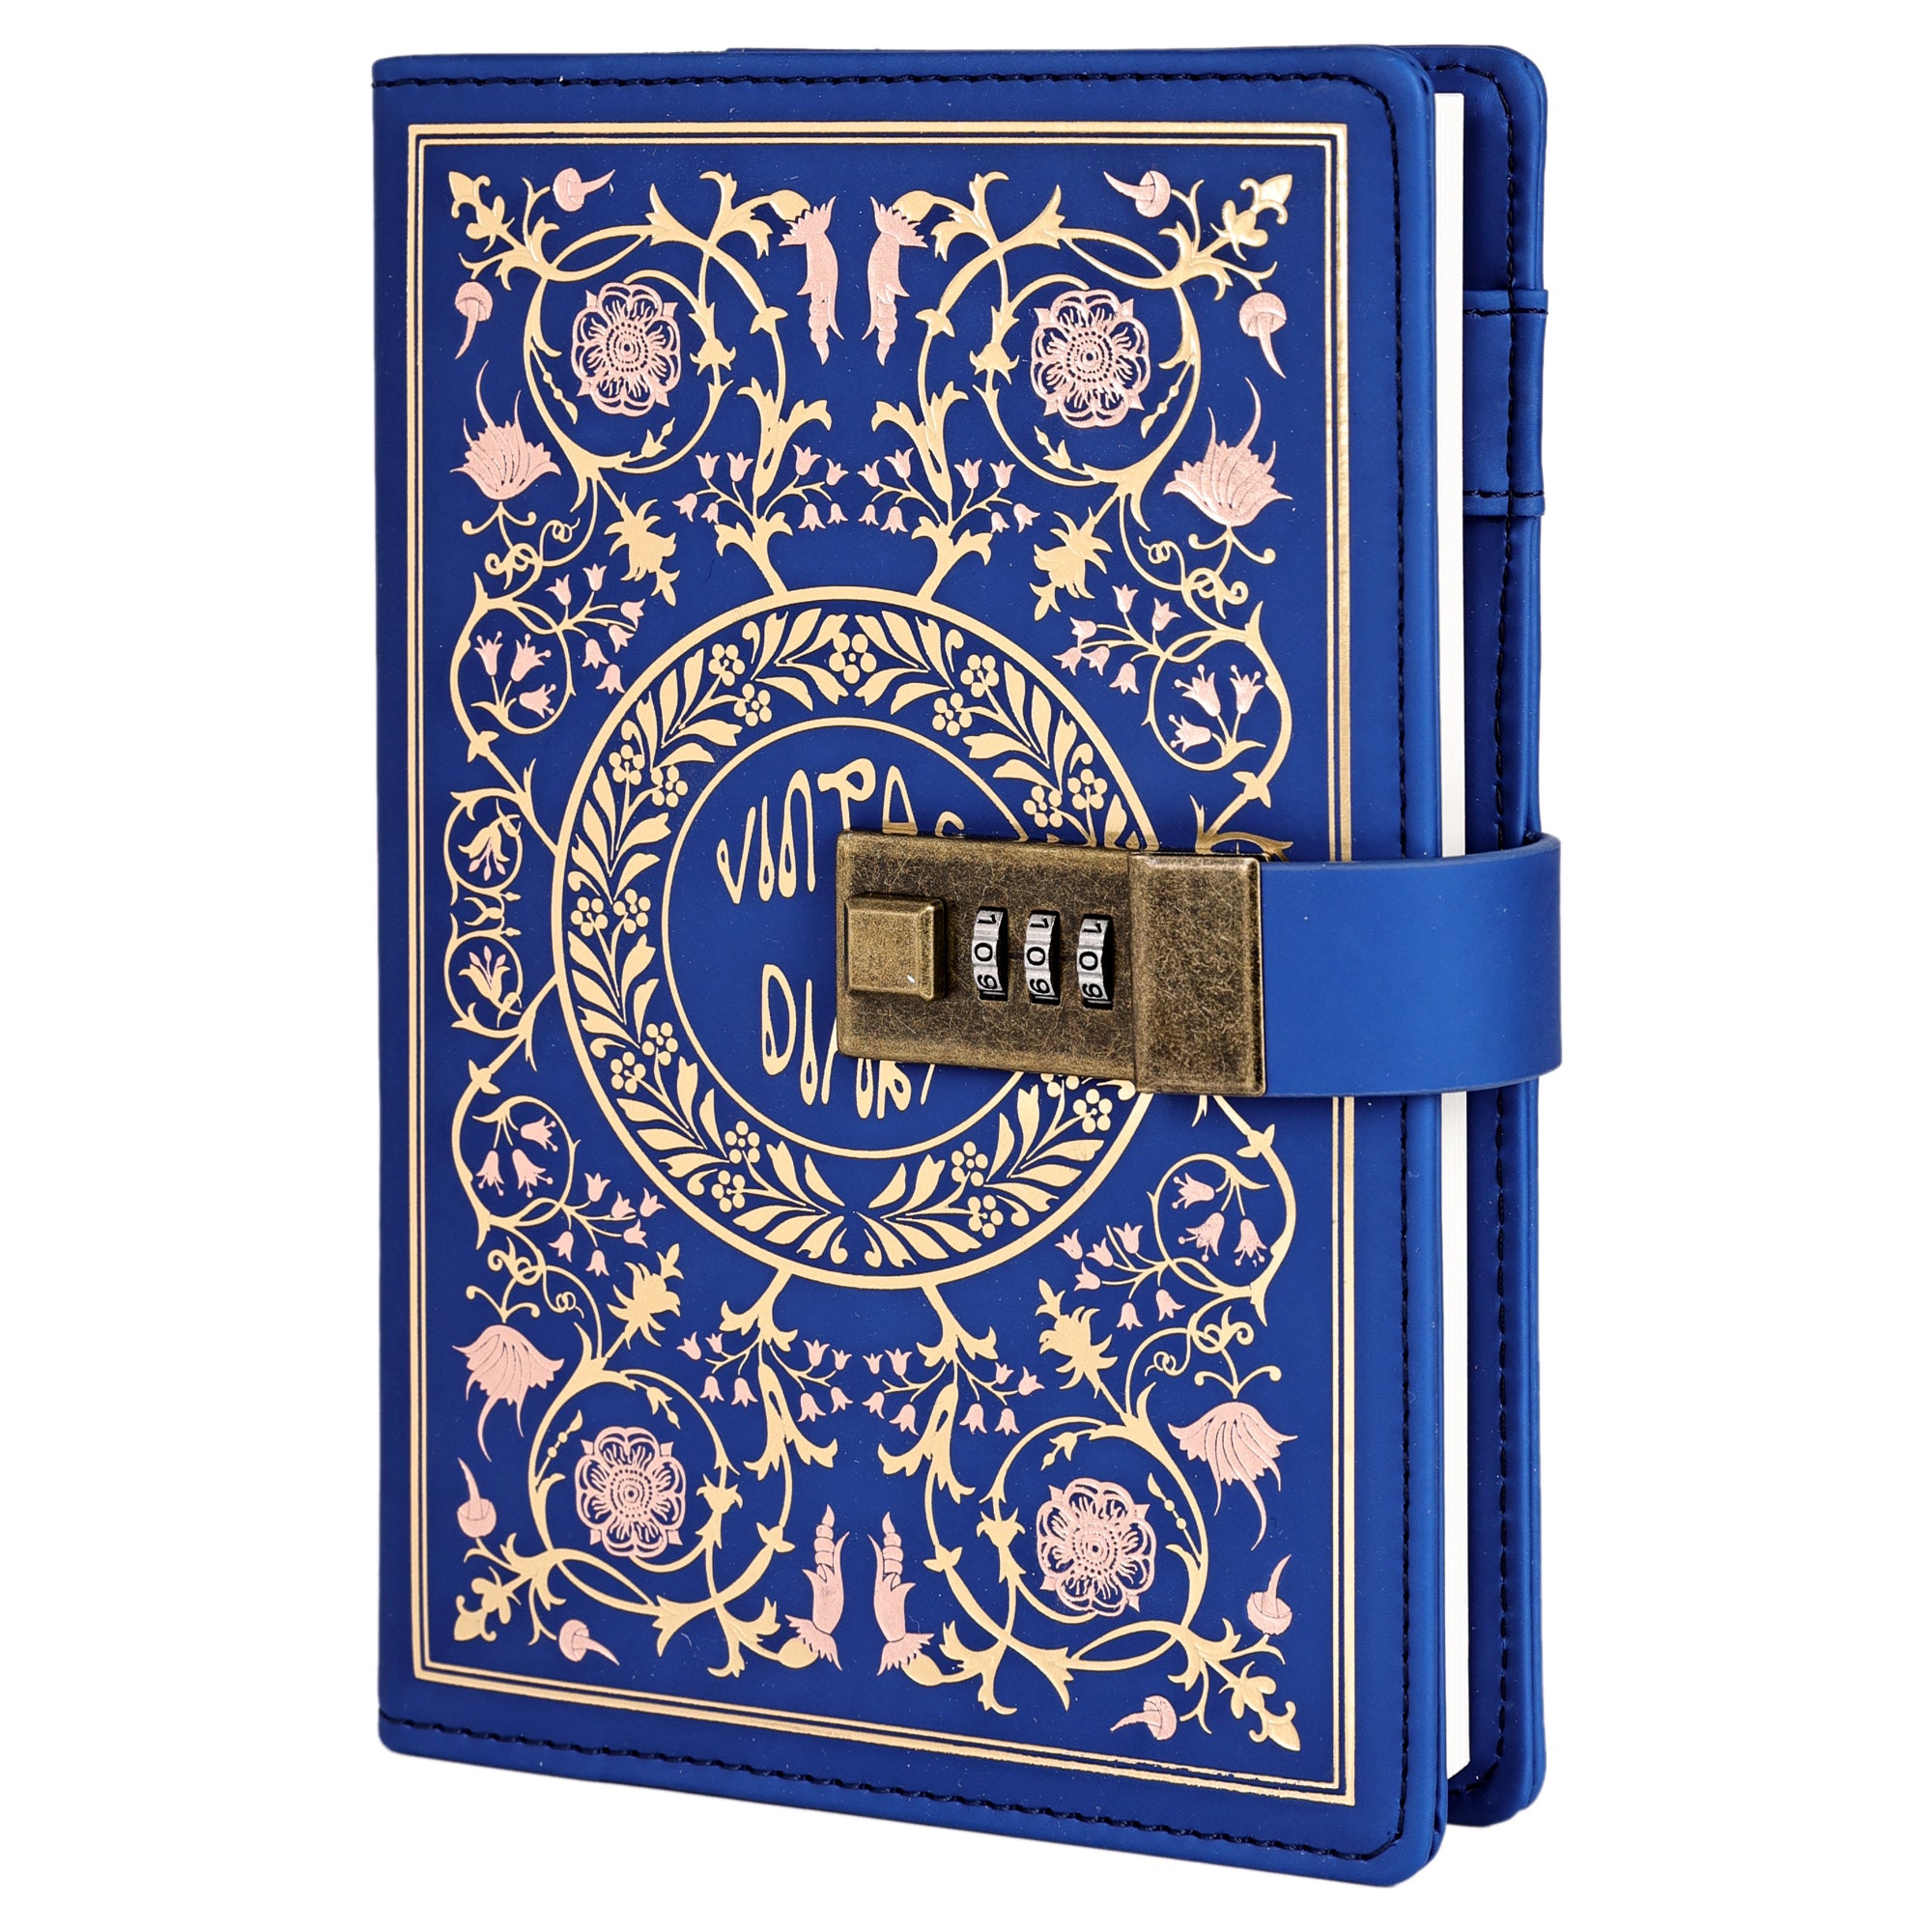 Vintage Flower Lock Journal - B6 - Ruled